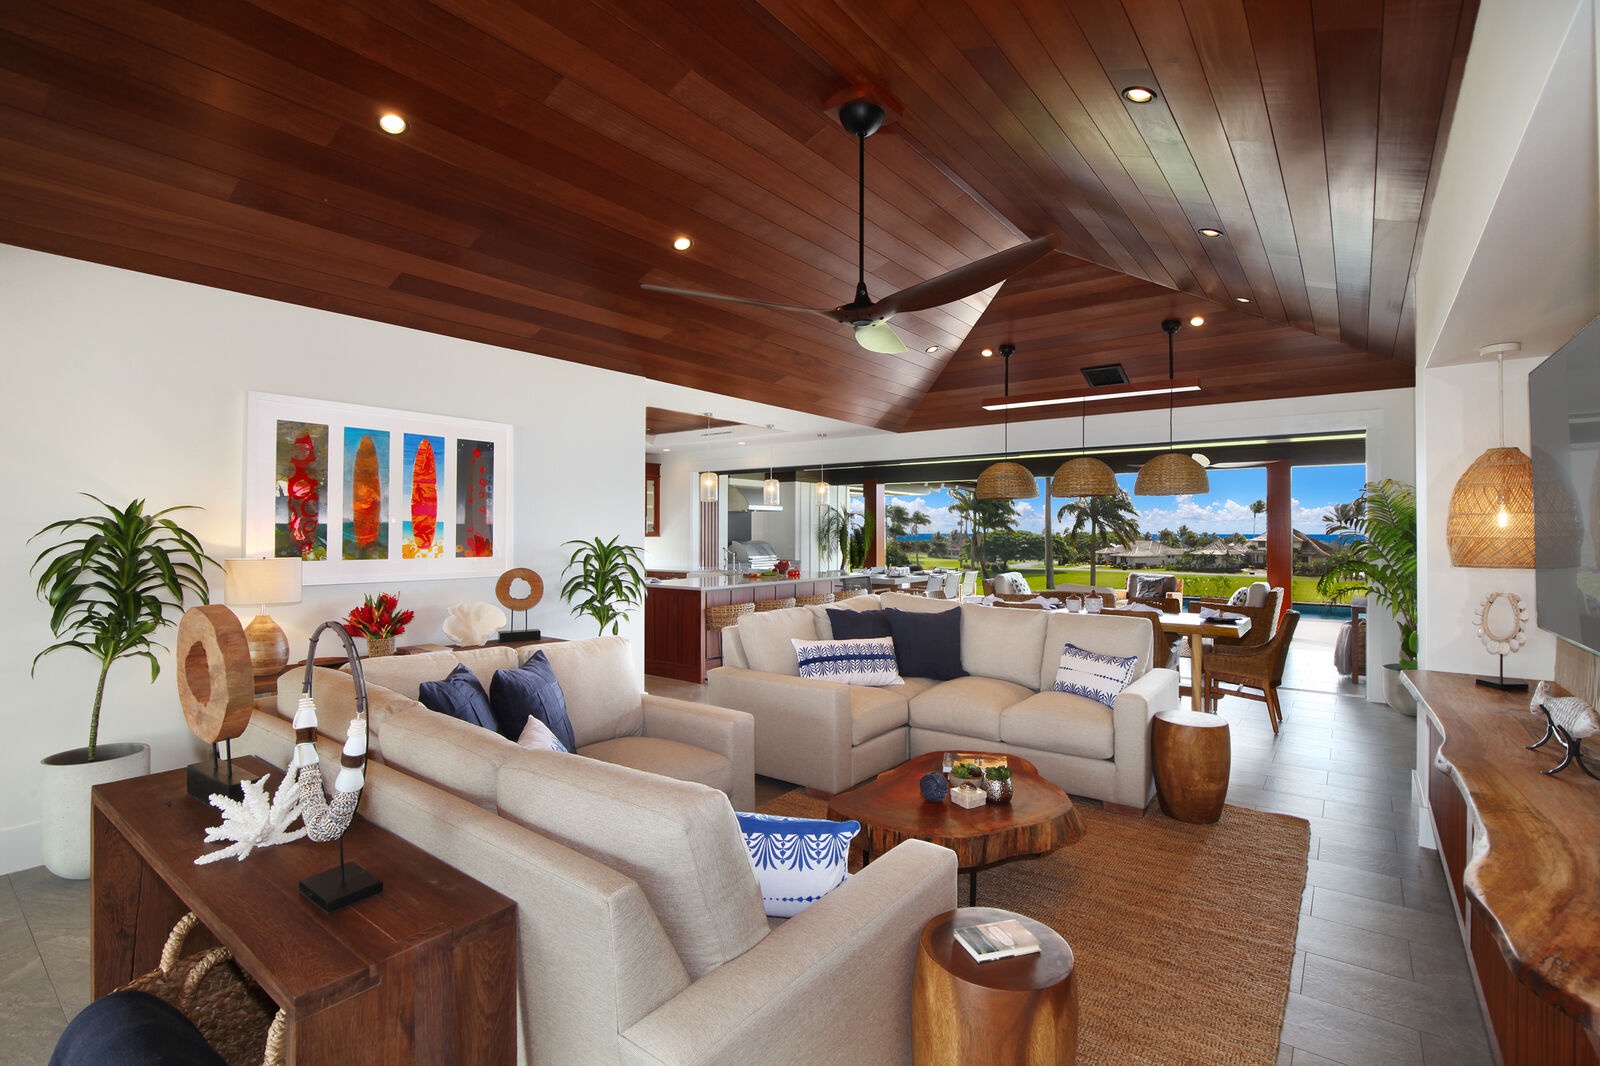 Koloa Vacation Rentals, Hale Kainani #6 E Komo Mai - Open living space with ocean views